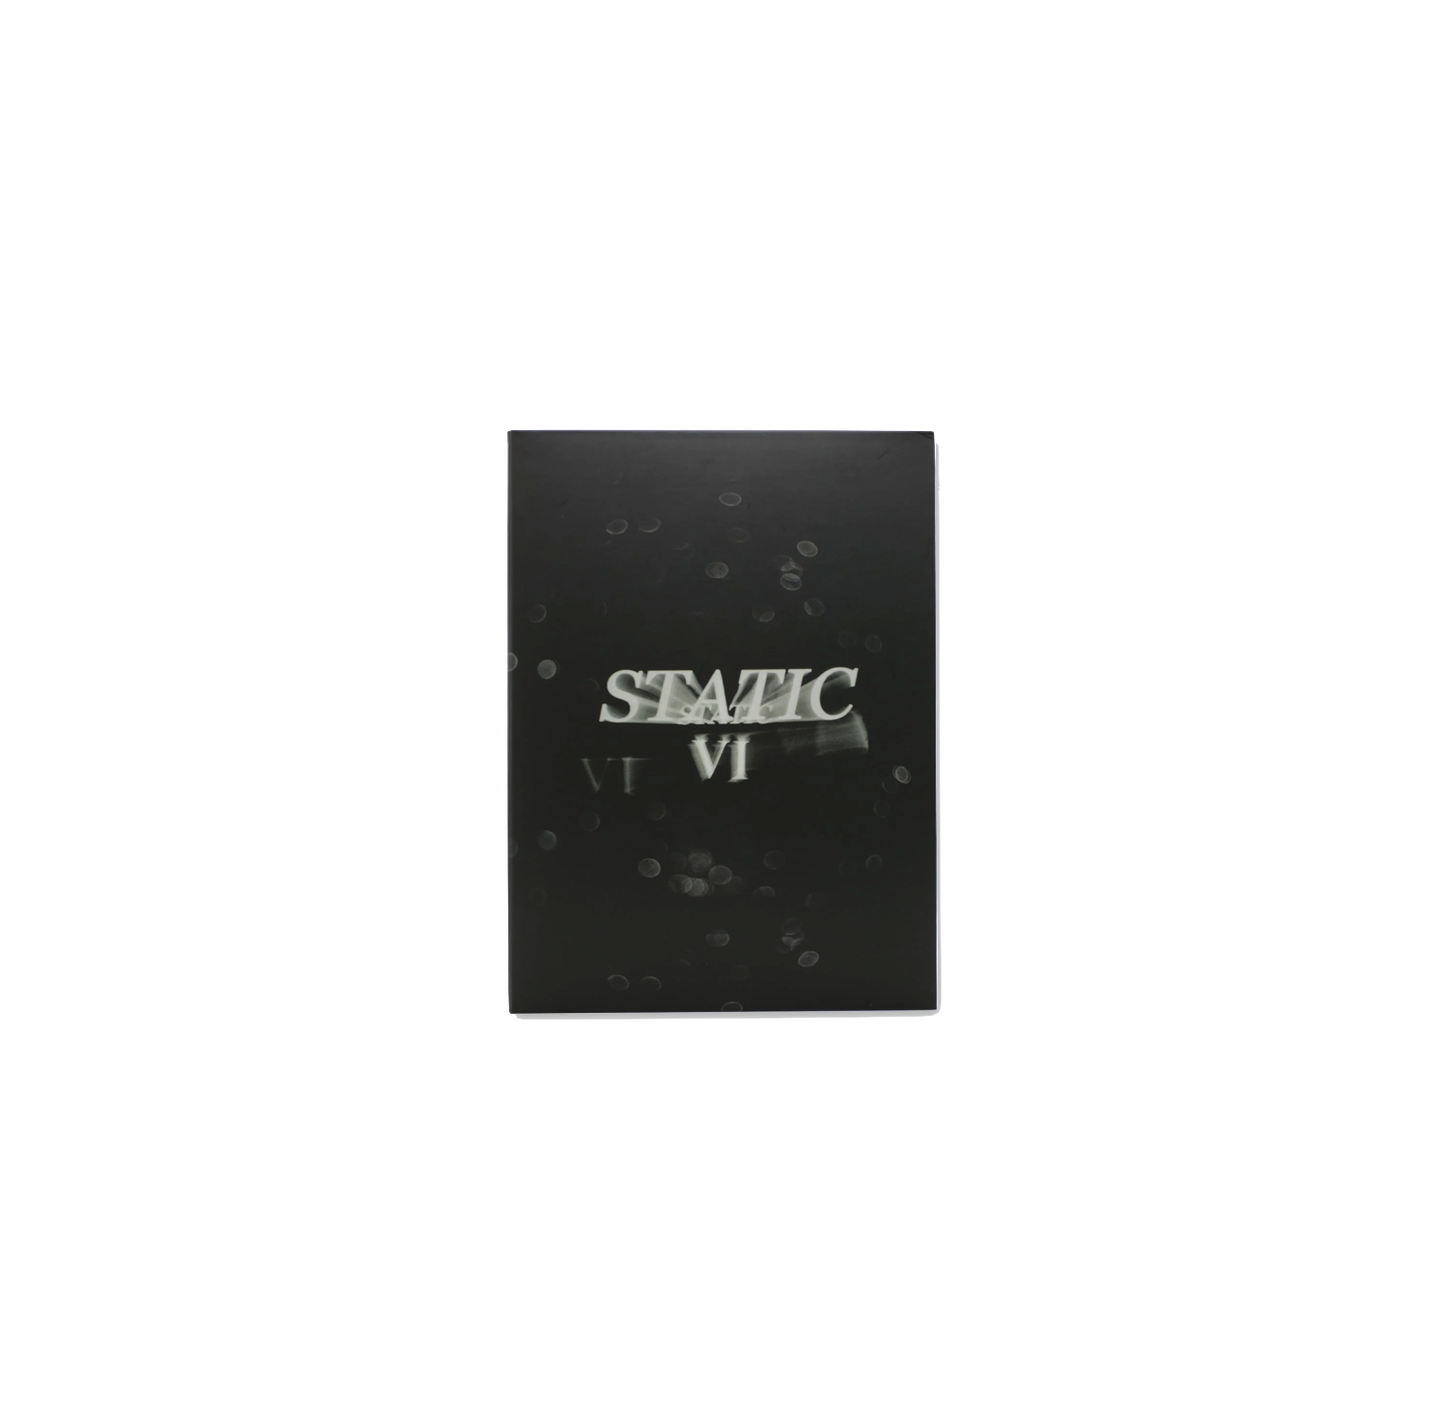 Theories Of Atlantis Static 6 video DVD